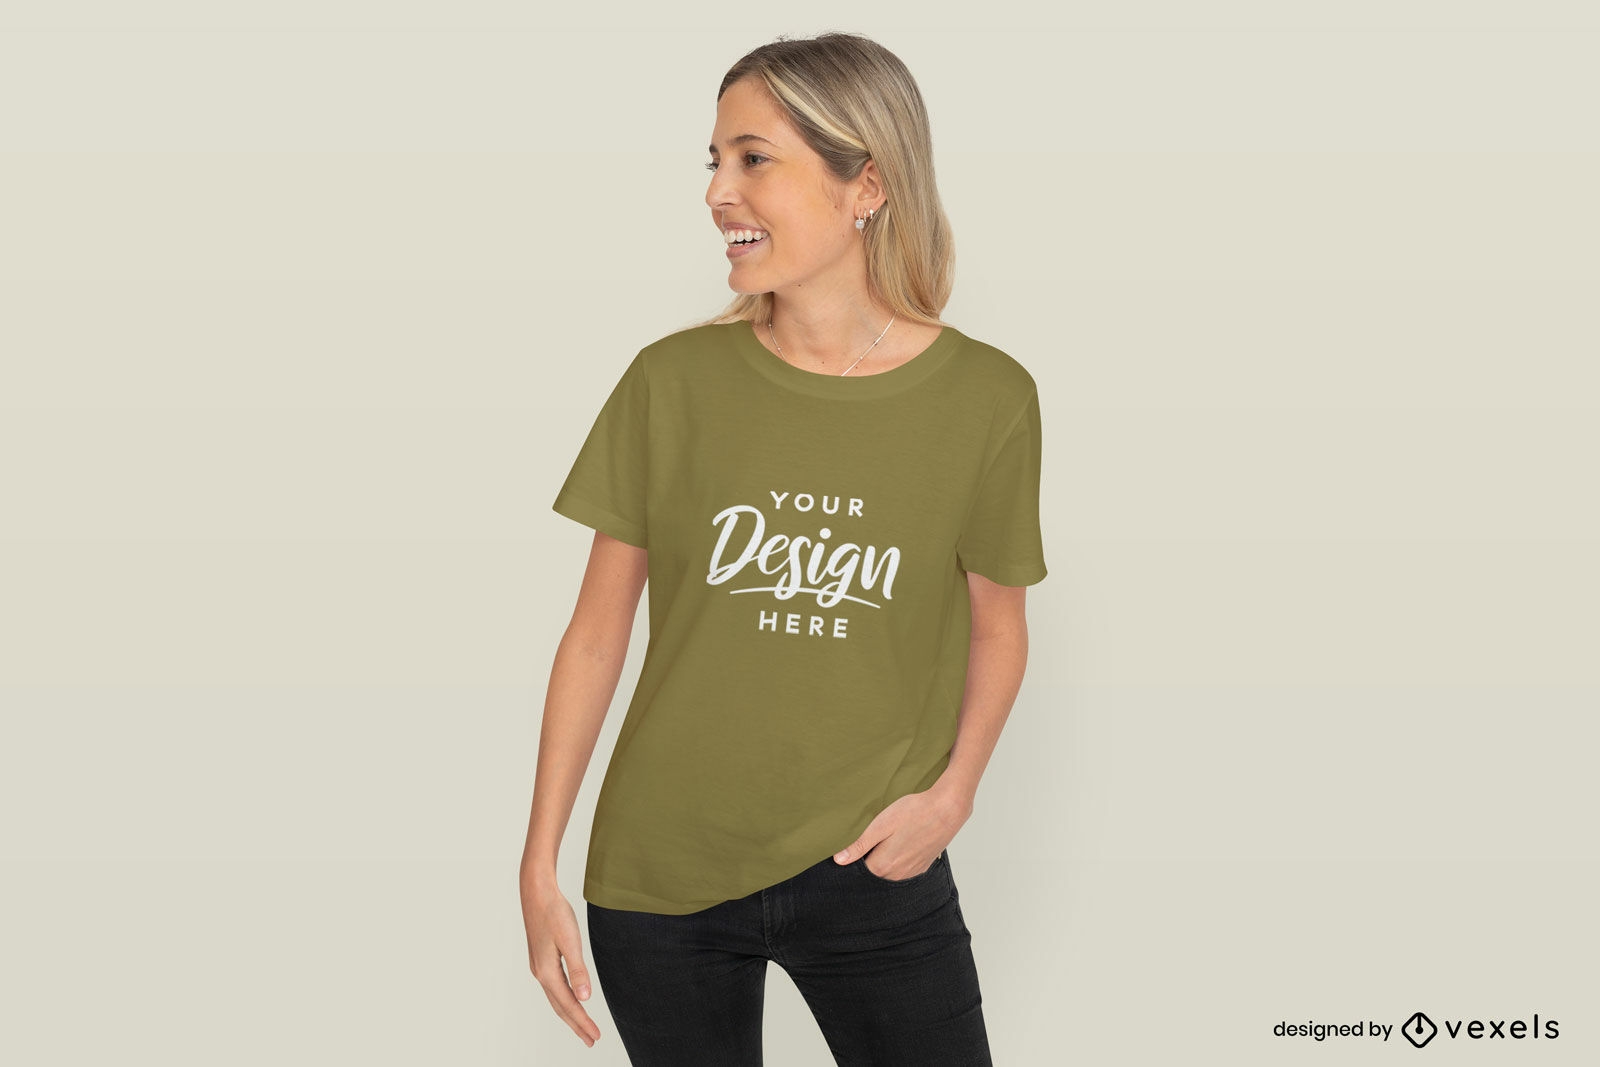 Blonde woman smiling in casual pose t-shirt mockup